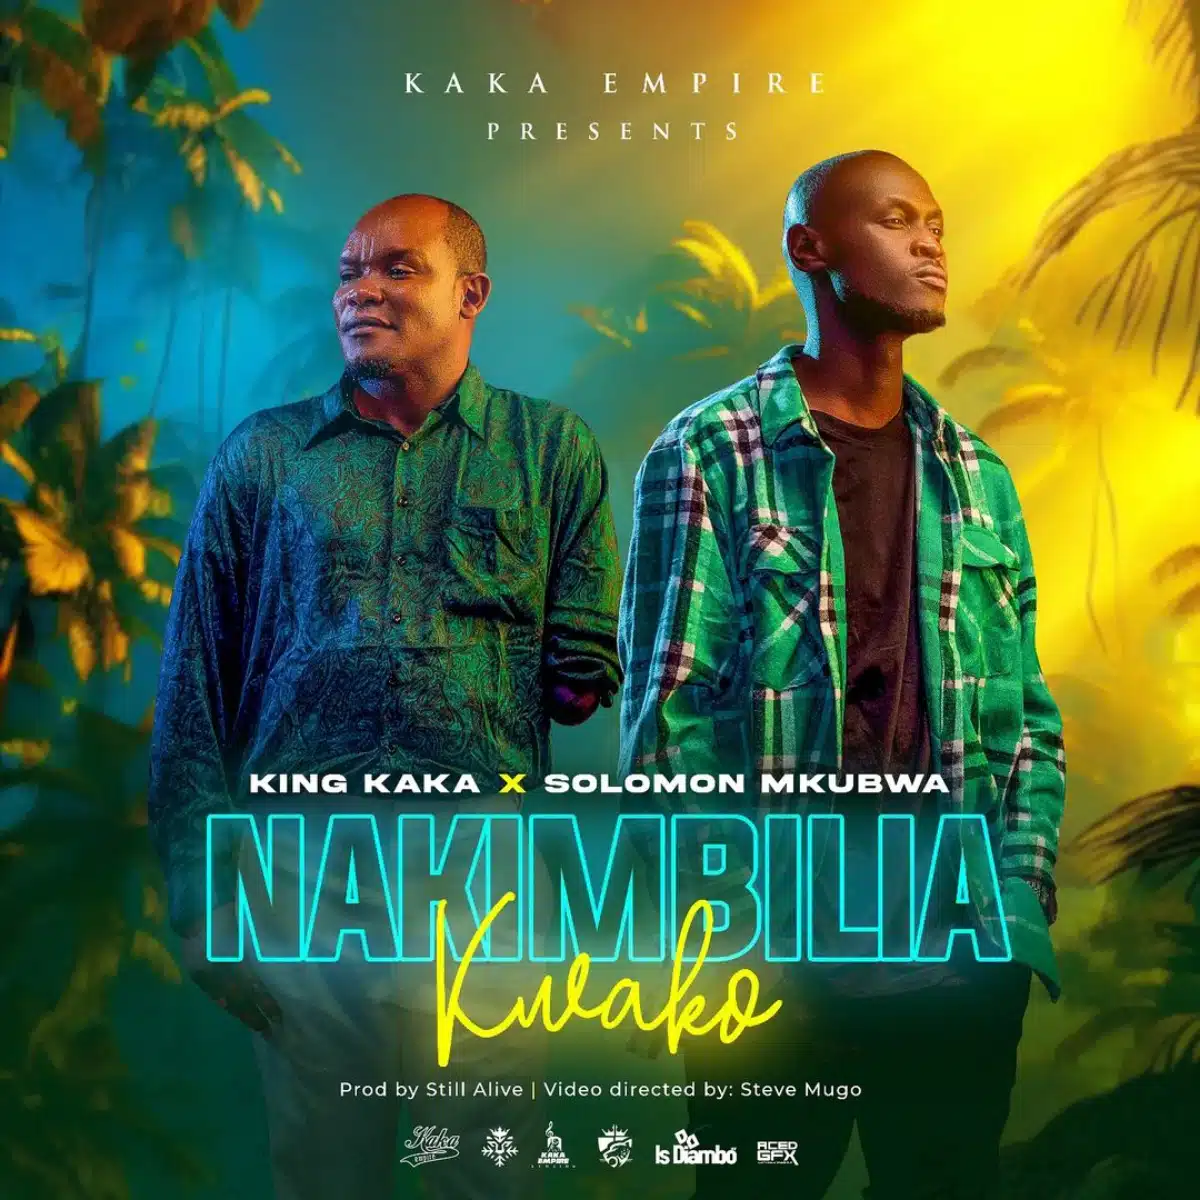 DOWNLOAD: King Kaka Ft Solomon Nkubwa – “Nakimbilia Kwako” (Video + Audio) Mp3